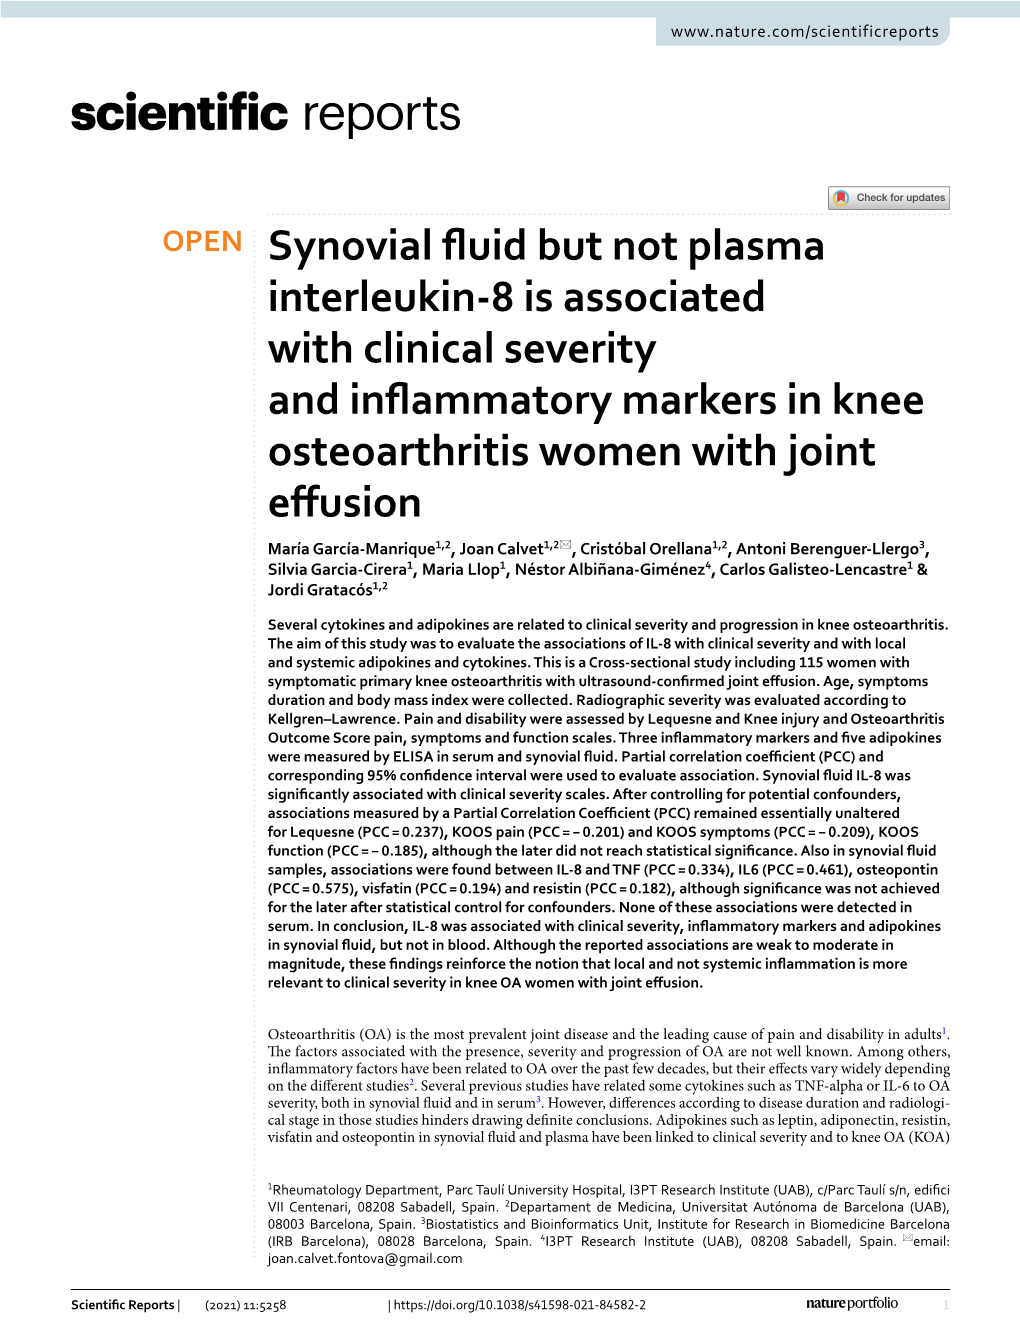 Synovial Fluid but Not Plasma Interleukin-8 Is Associated